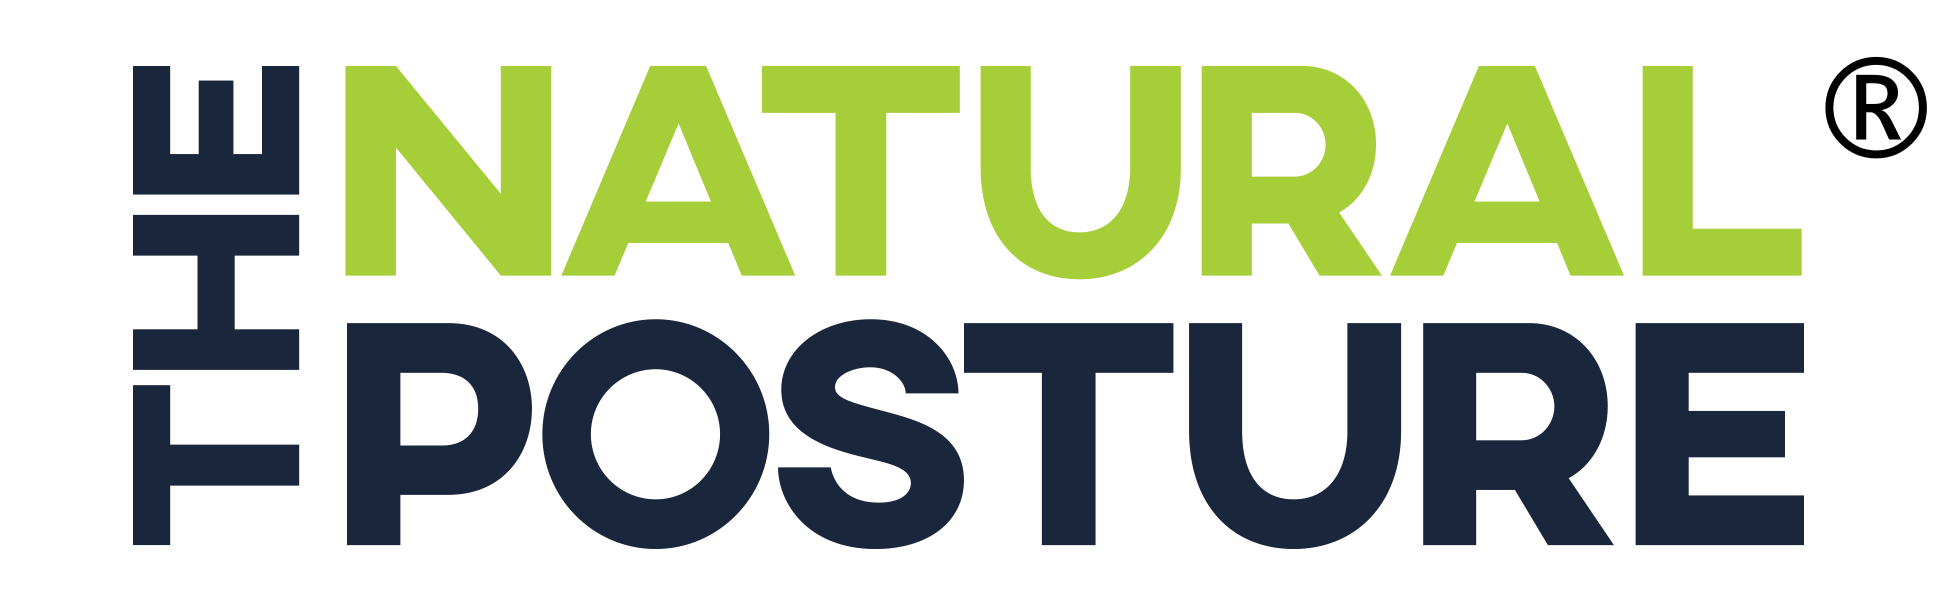 The Natural Posture  Posture Correctors, Braces, & Shapewear